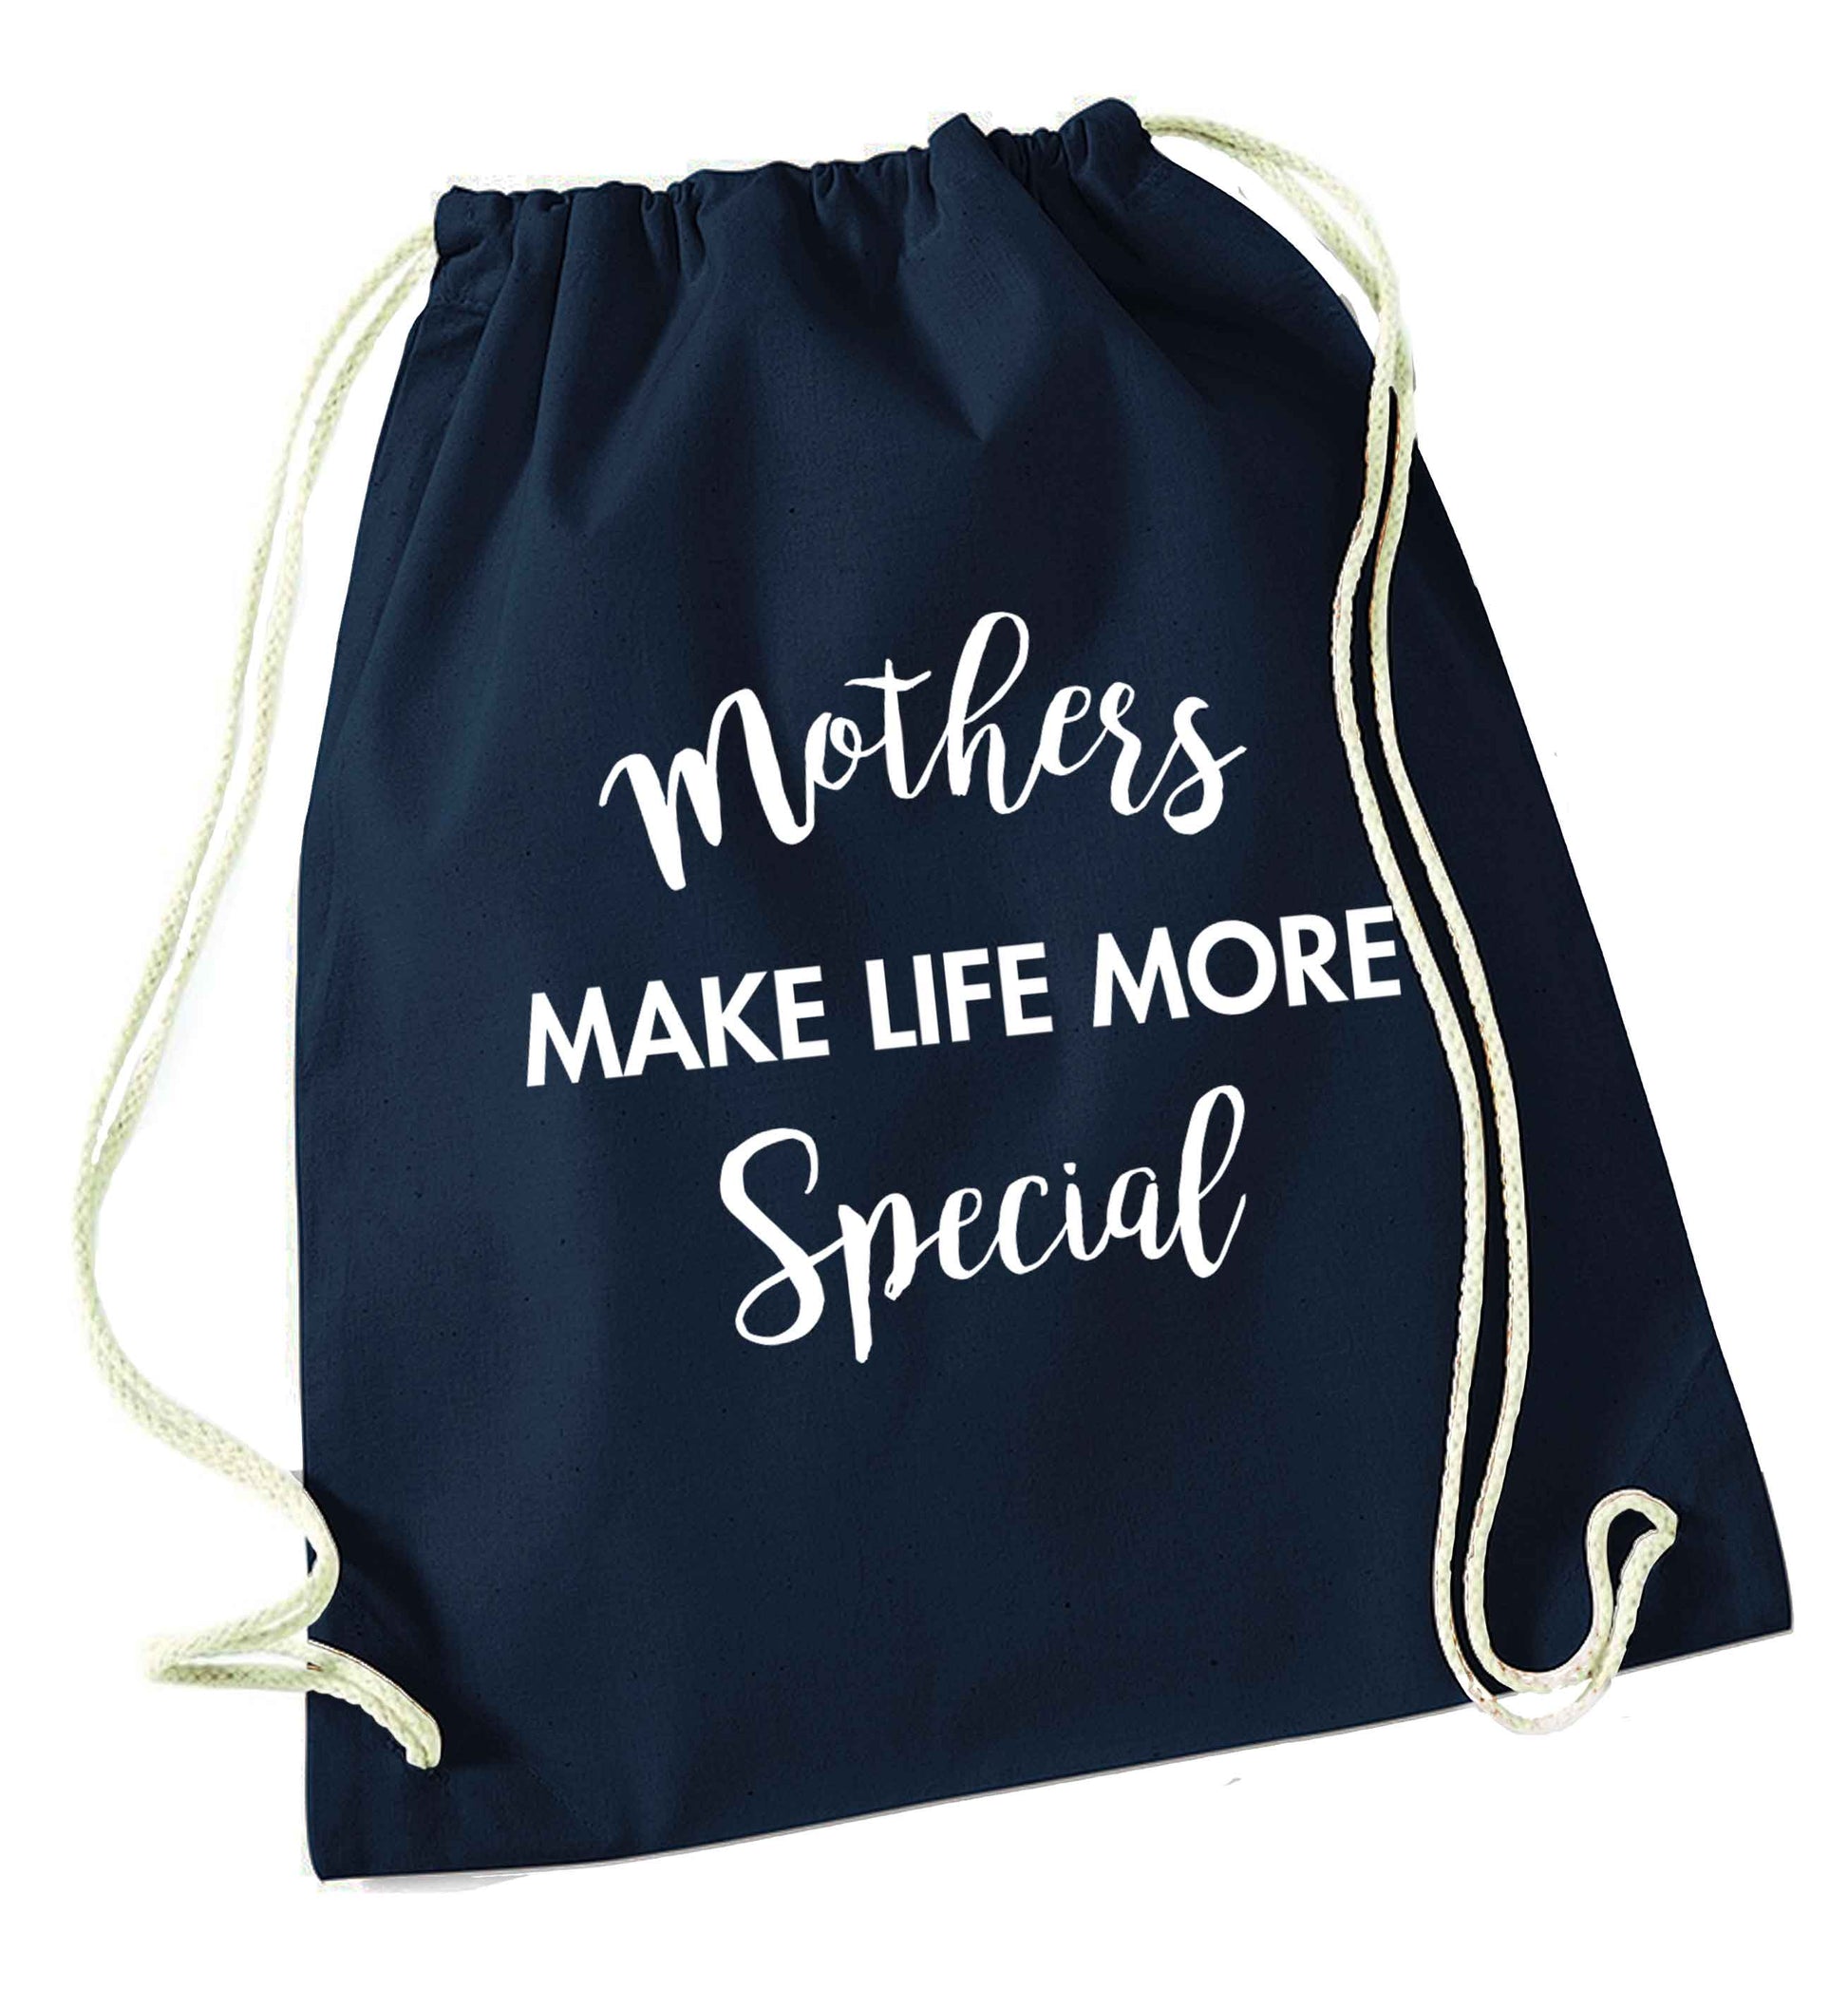 Mother's make life more special navy drawstring bag